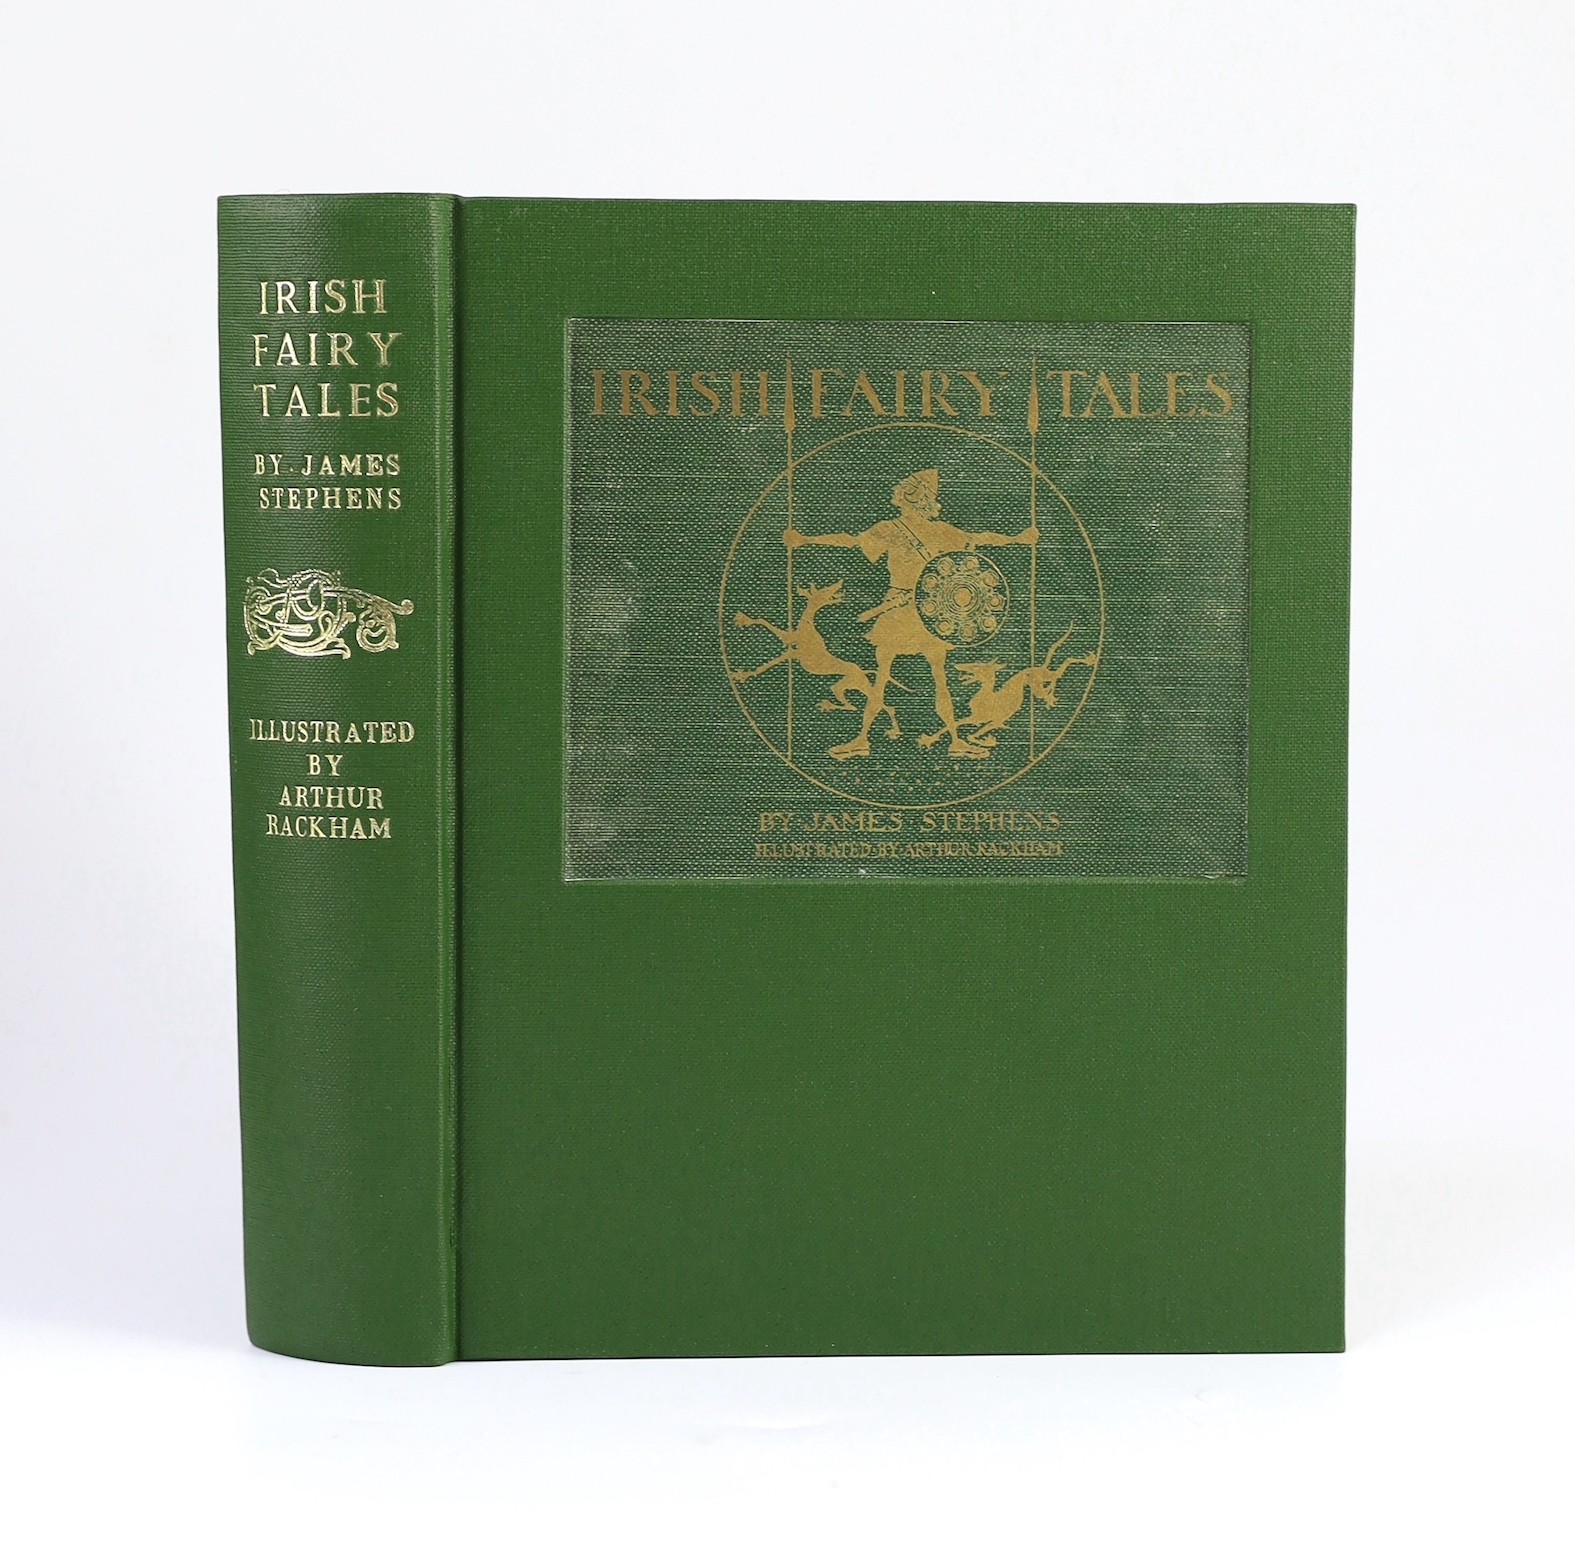 Stephens, James - Irish Fairy Tales, 1st edition, illustrated with 16 colour plates by Arthur Rackham, 8vo, original cloth, Macmillan, London, 1920, in slip case.                                                          